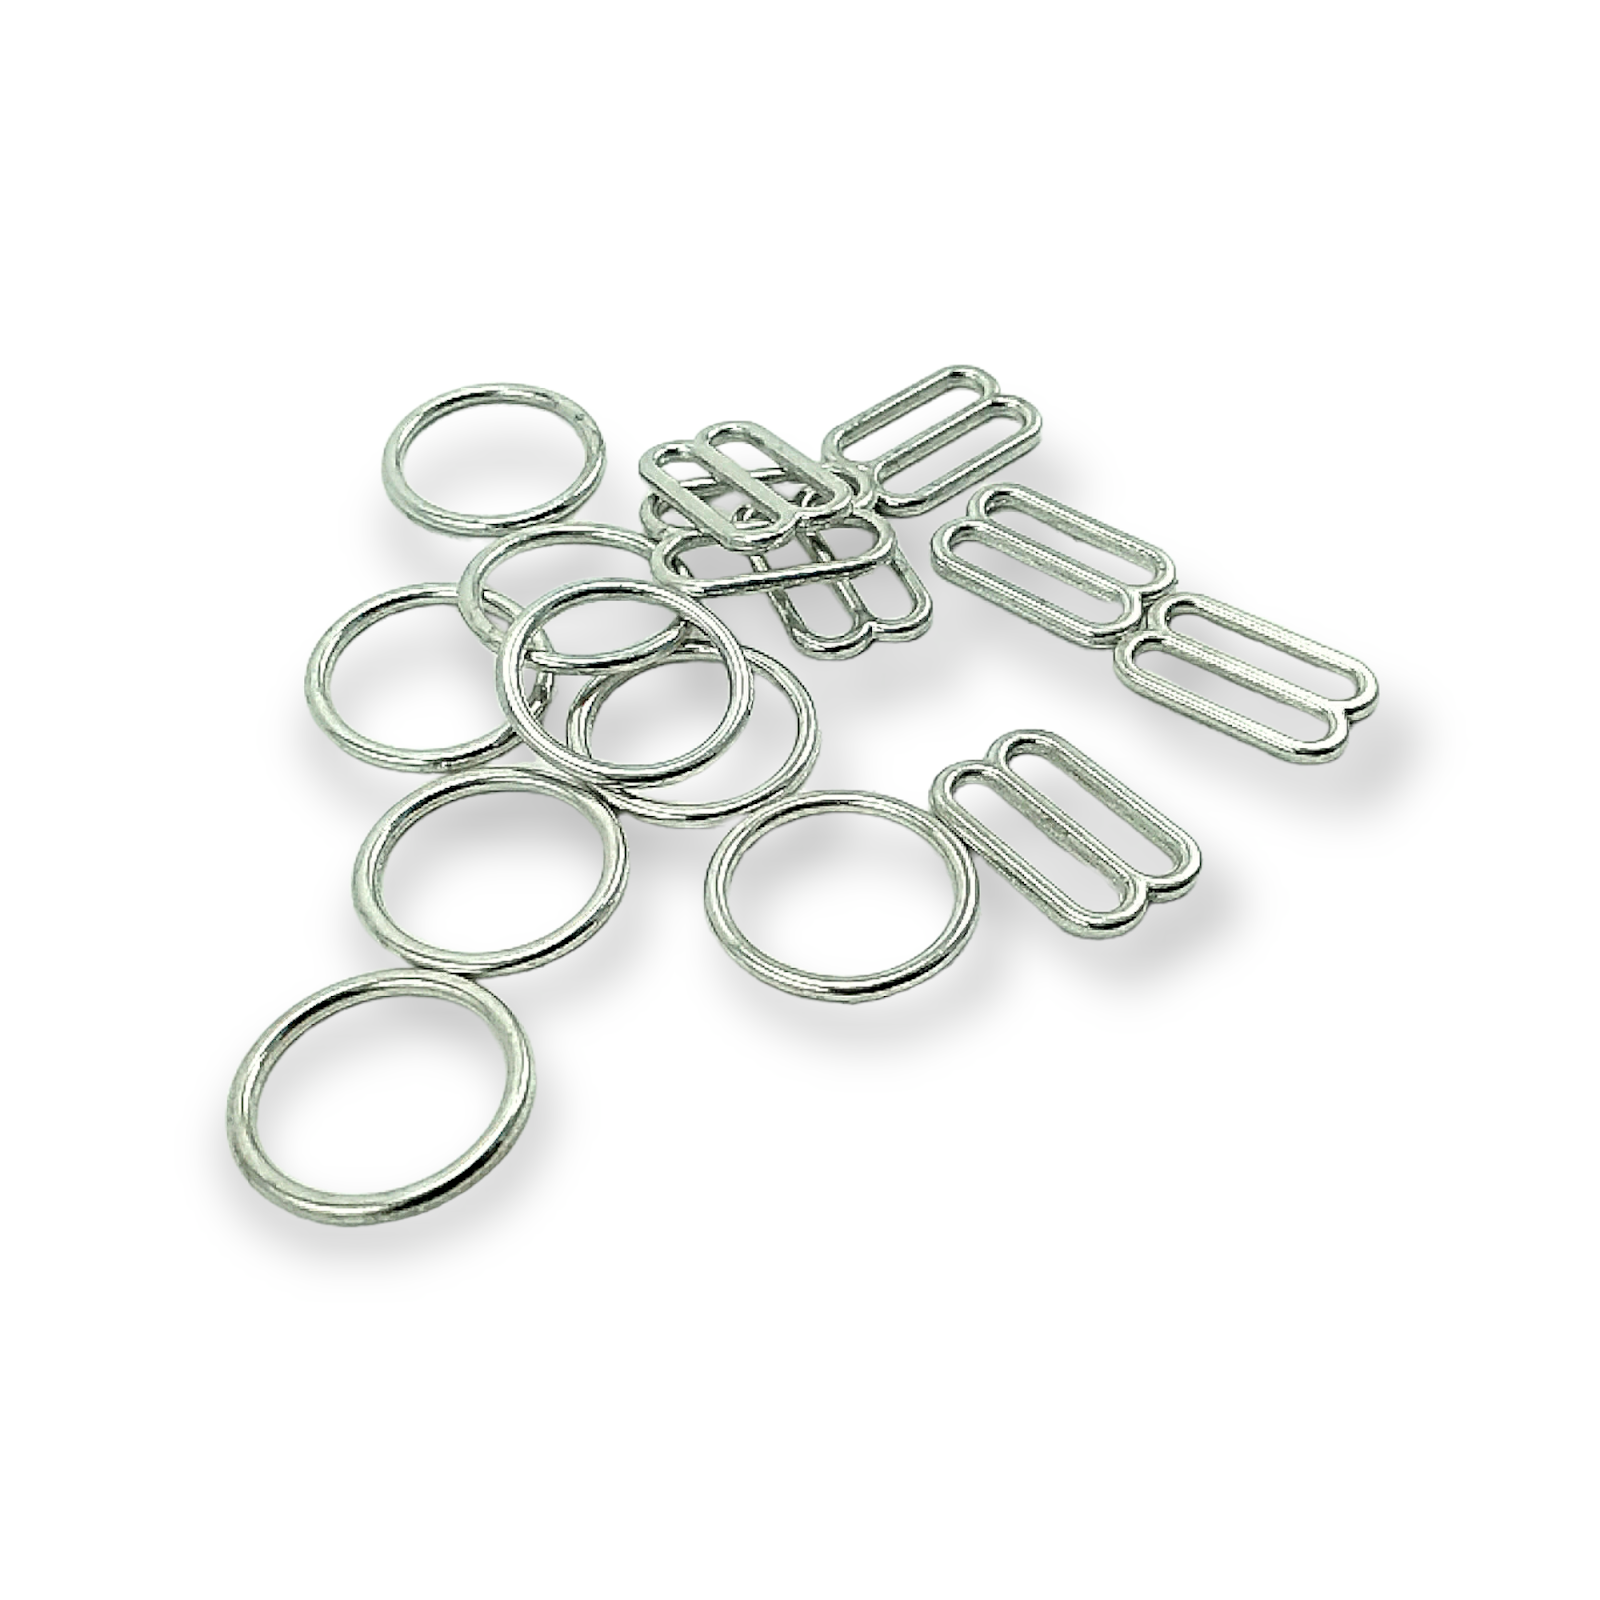 Bra Accessories Metal Bra Loop, High Quality Bra Accessories Metal